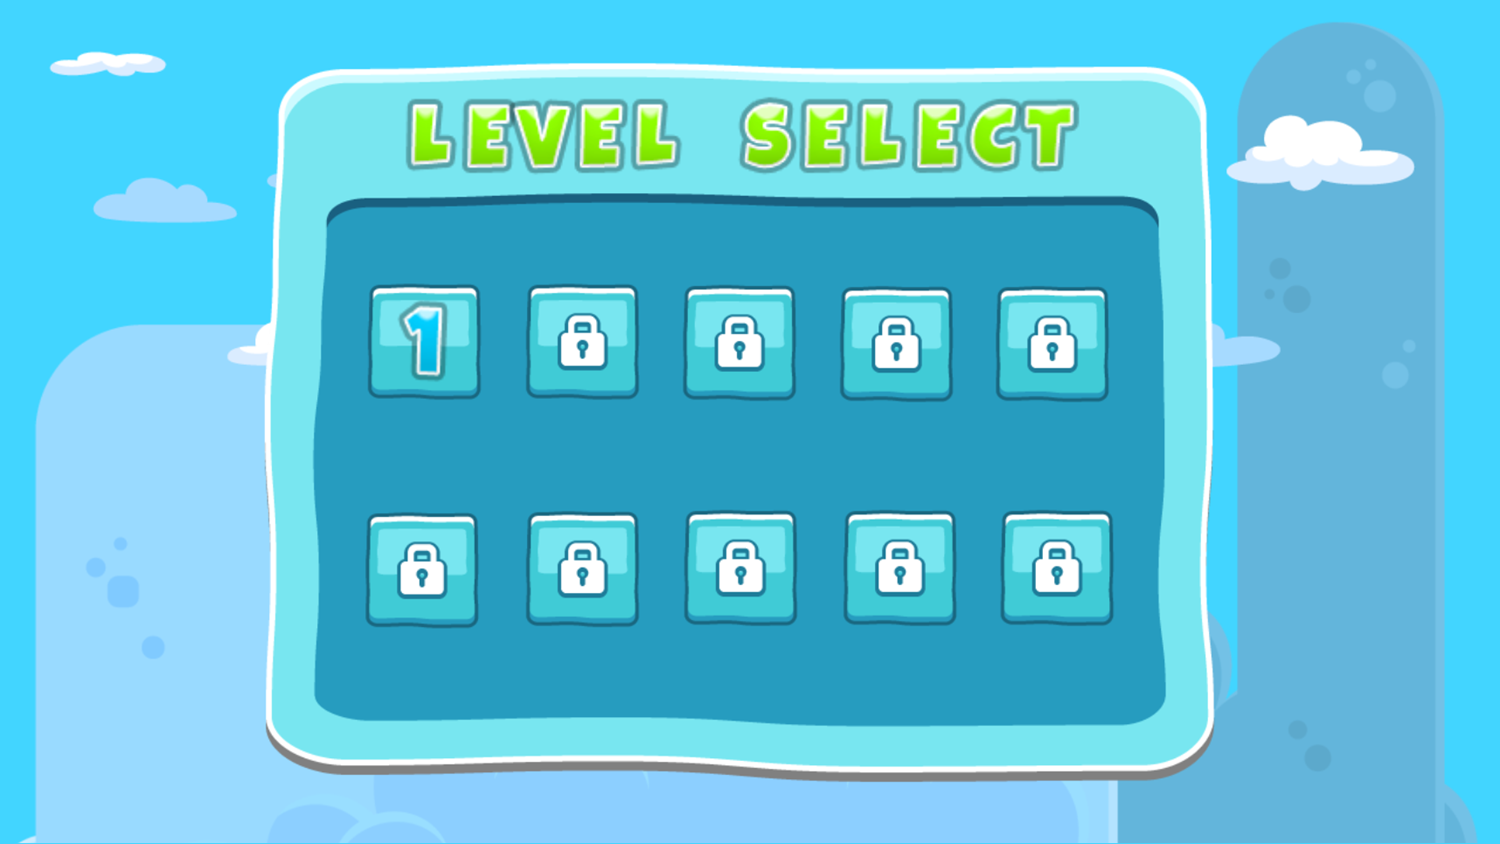 Iceland Adventure 2 Game Level Select Screenshot.